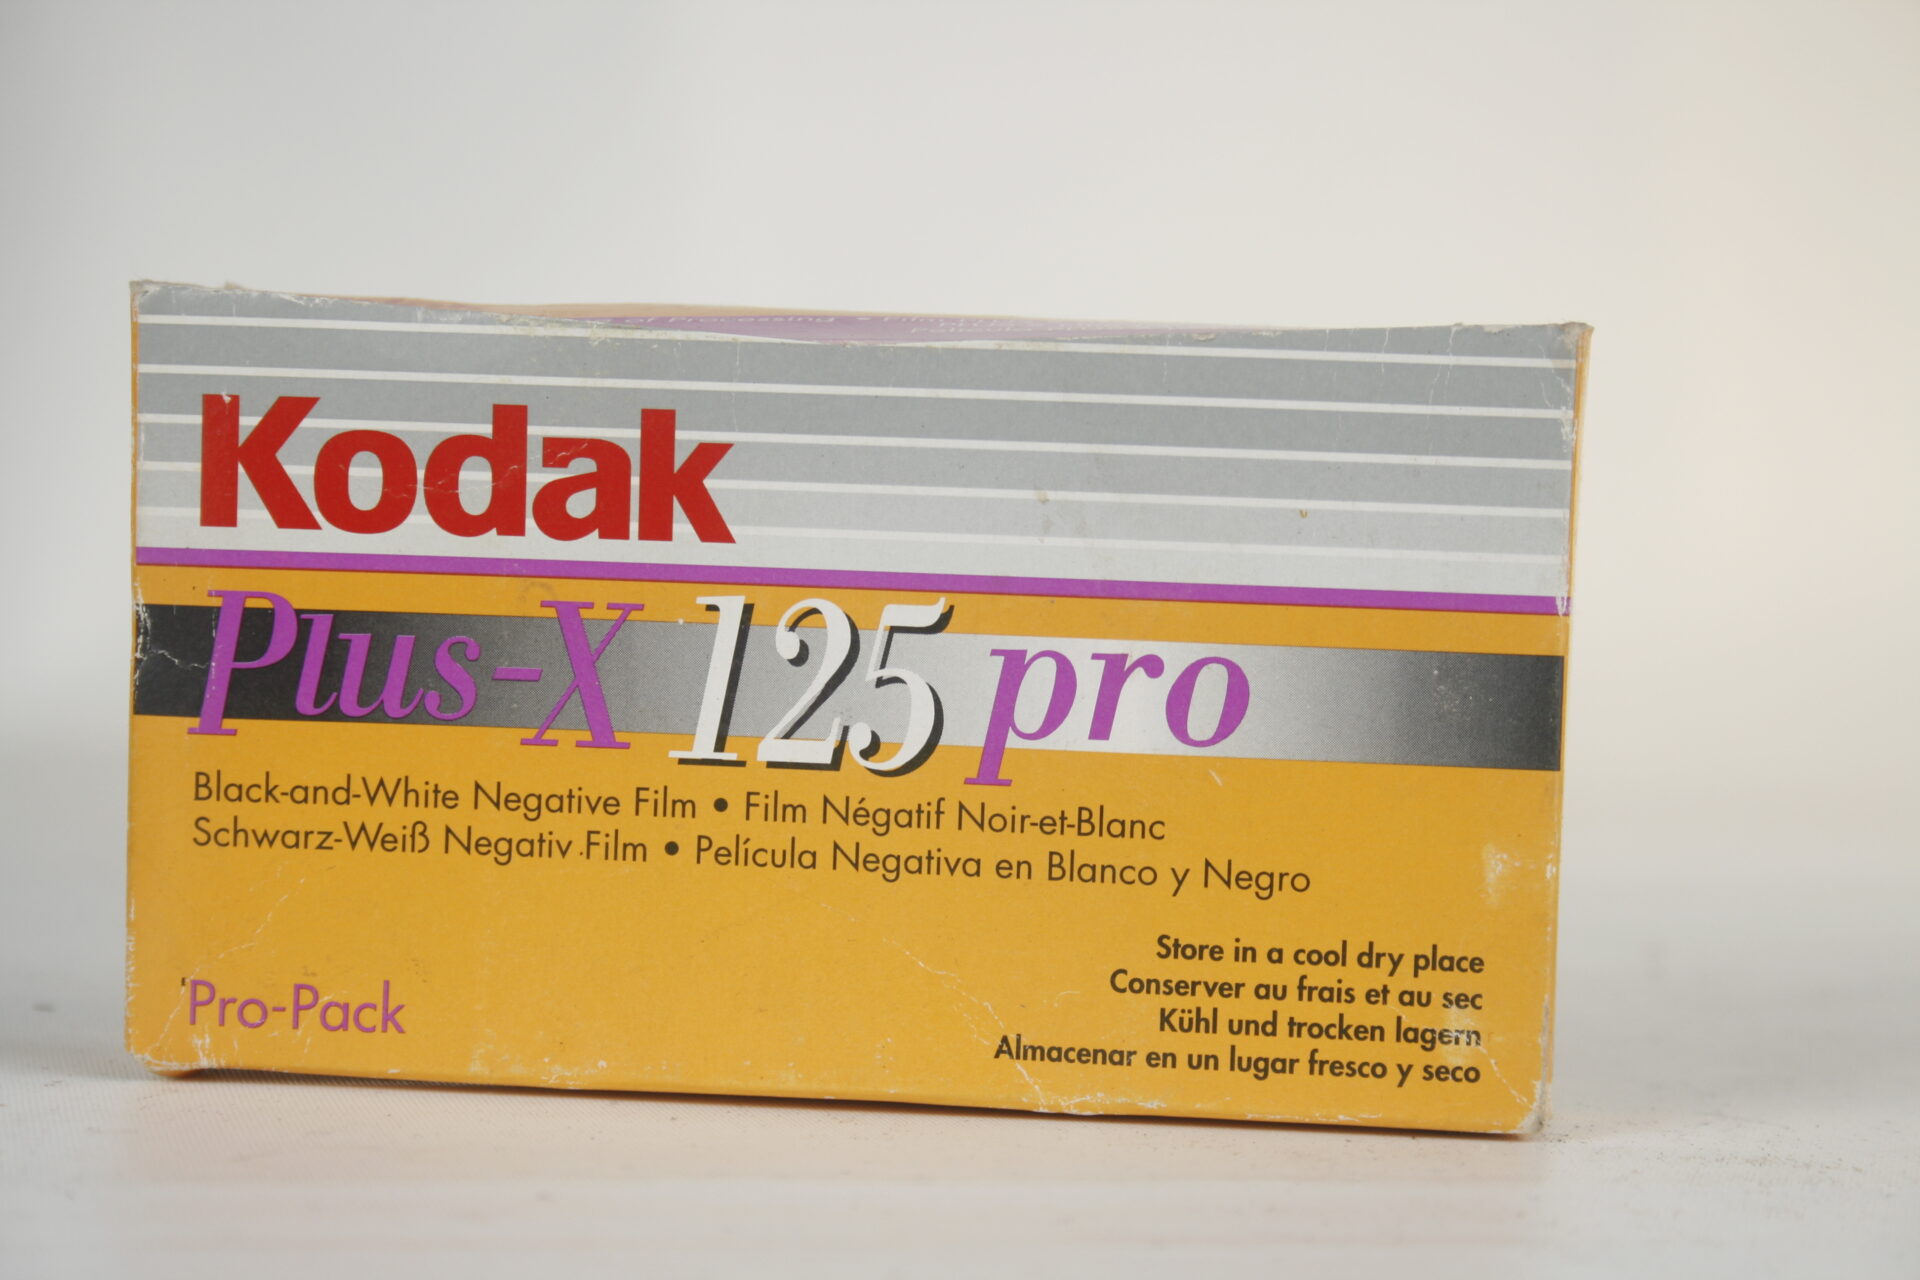 Kodak Plus-X 125 pro. Zwart wit negatief film. Pro pack. 2